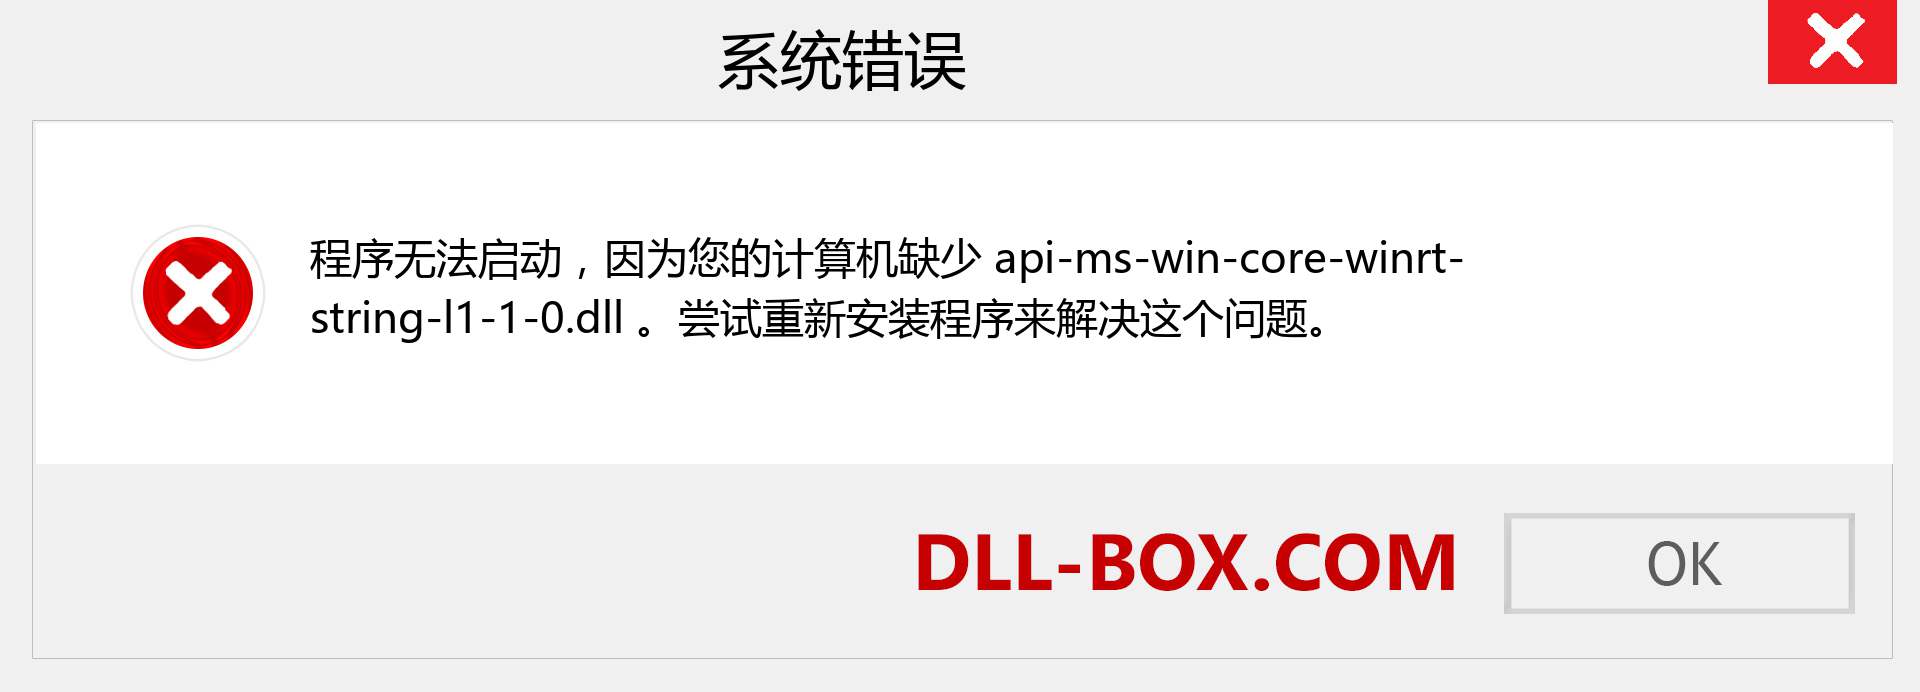 api-ms-win-core-winrt-string-l1-1-0.dll 文件丢失？。 适用于 Windows 7、8、10 的下载 - 修复 Windows、照片、图像上的 api-ms-win-core-winrt-string-l1-1-0 dll 丢失错误